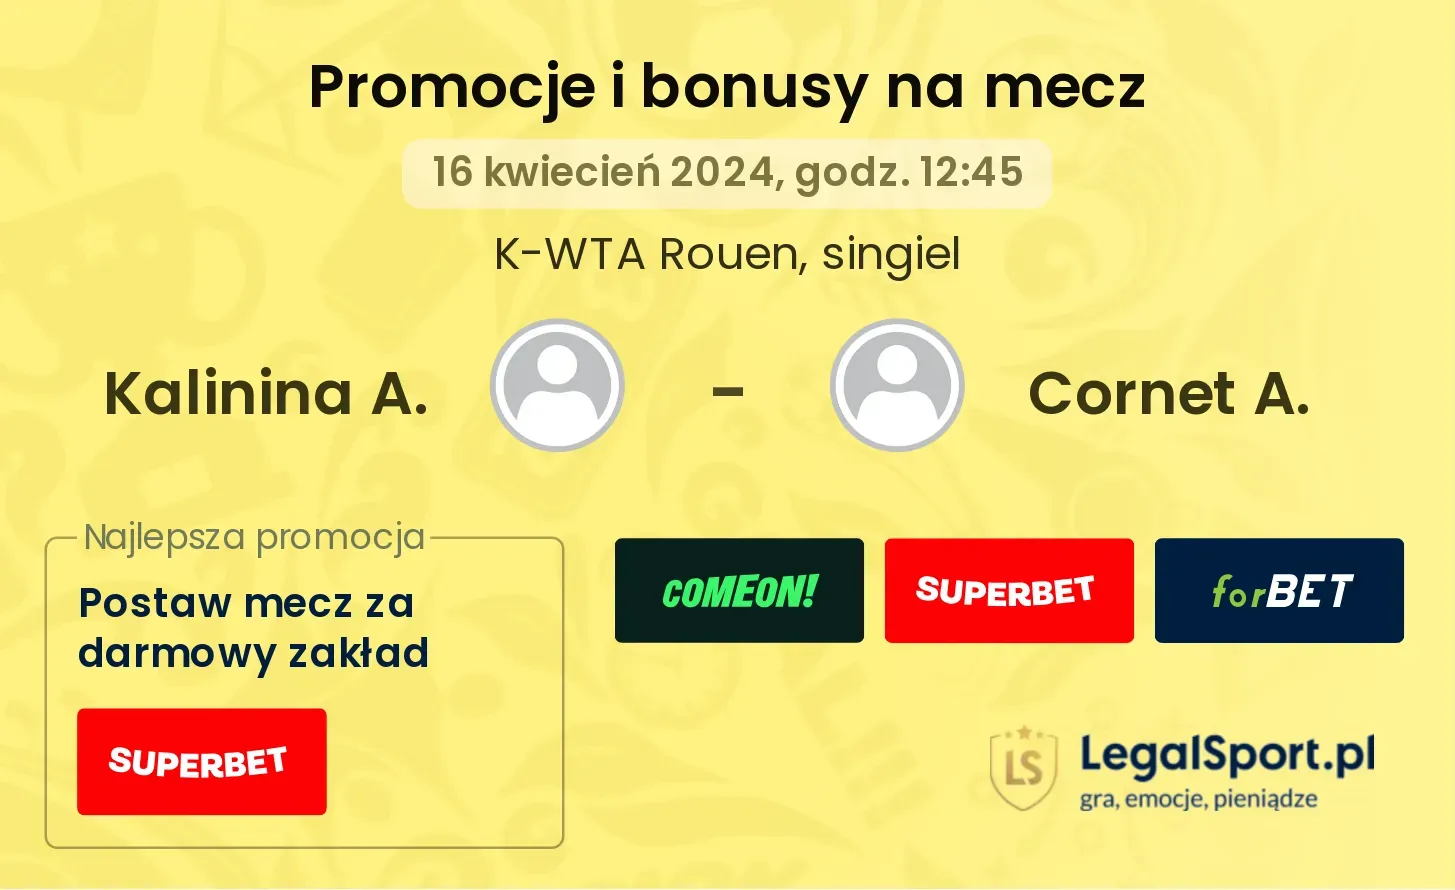 Kalinina A. - Cornet A. promocje bonusy na mecz